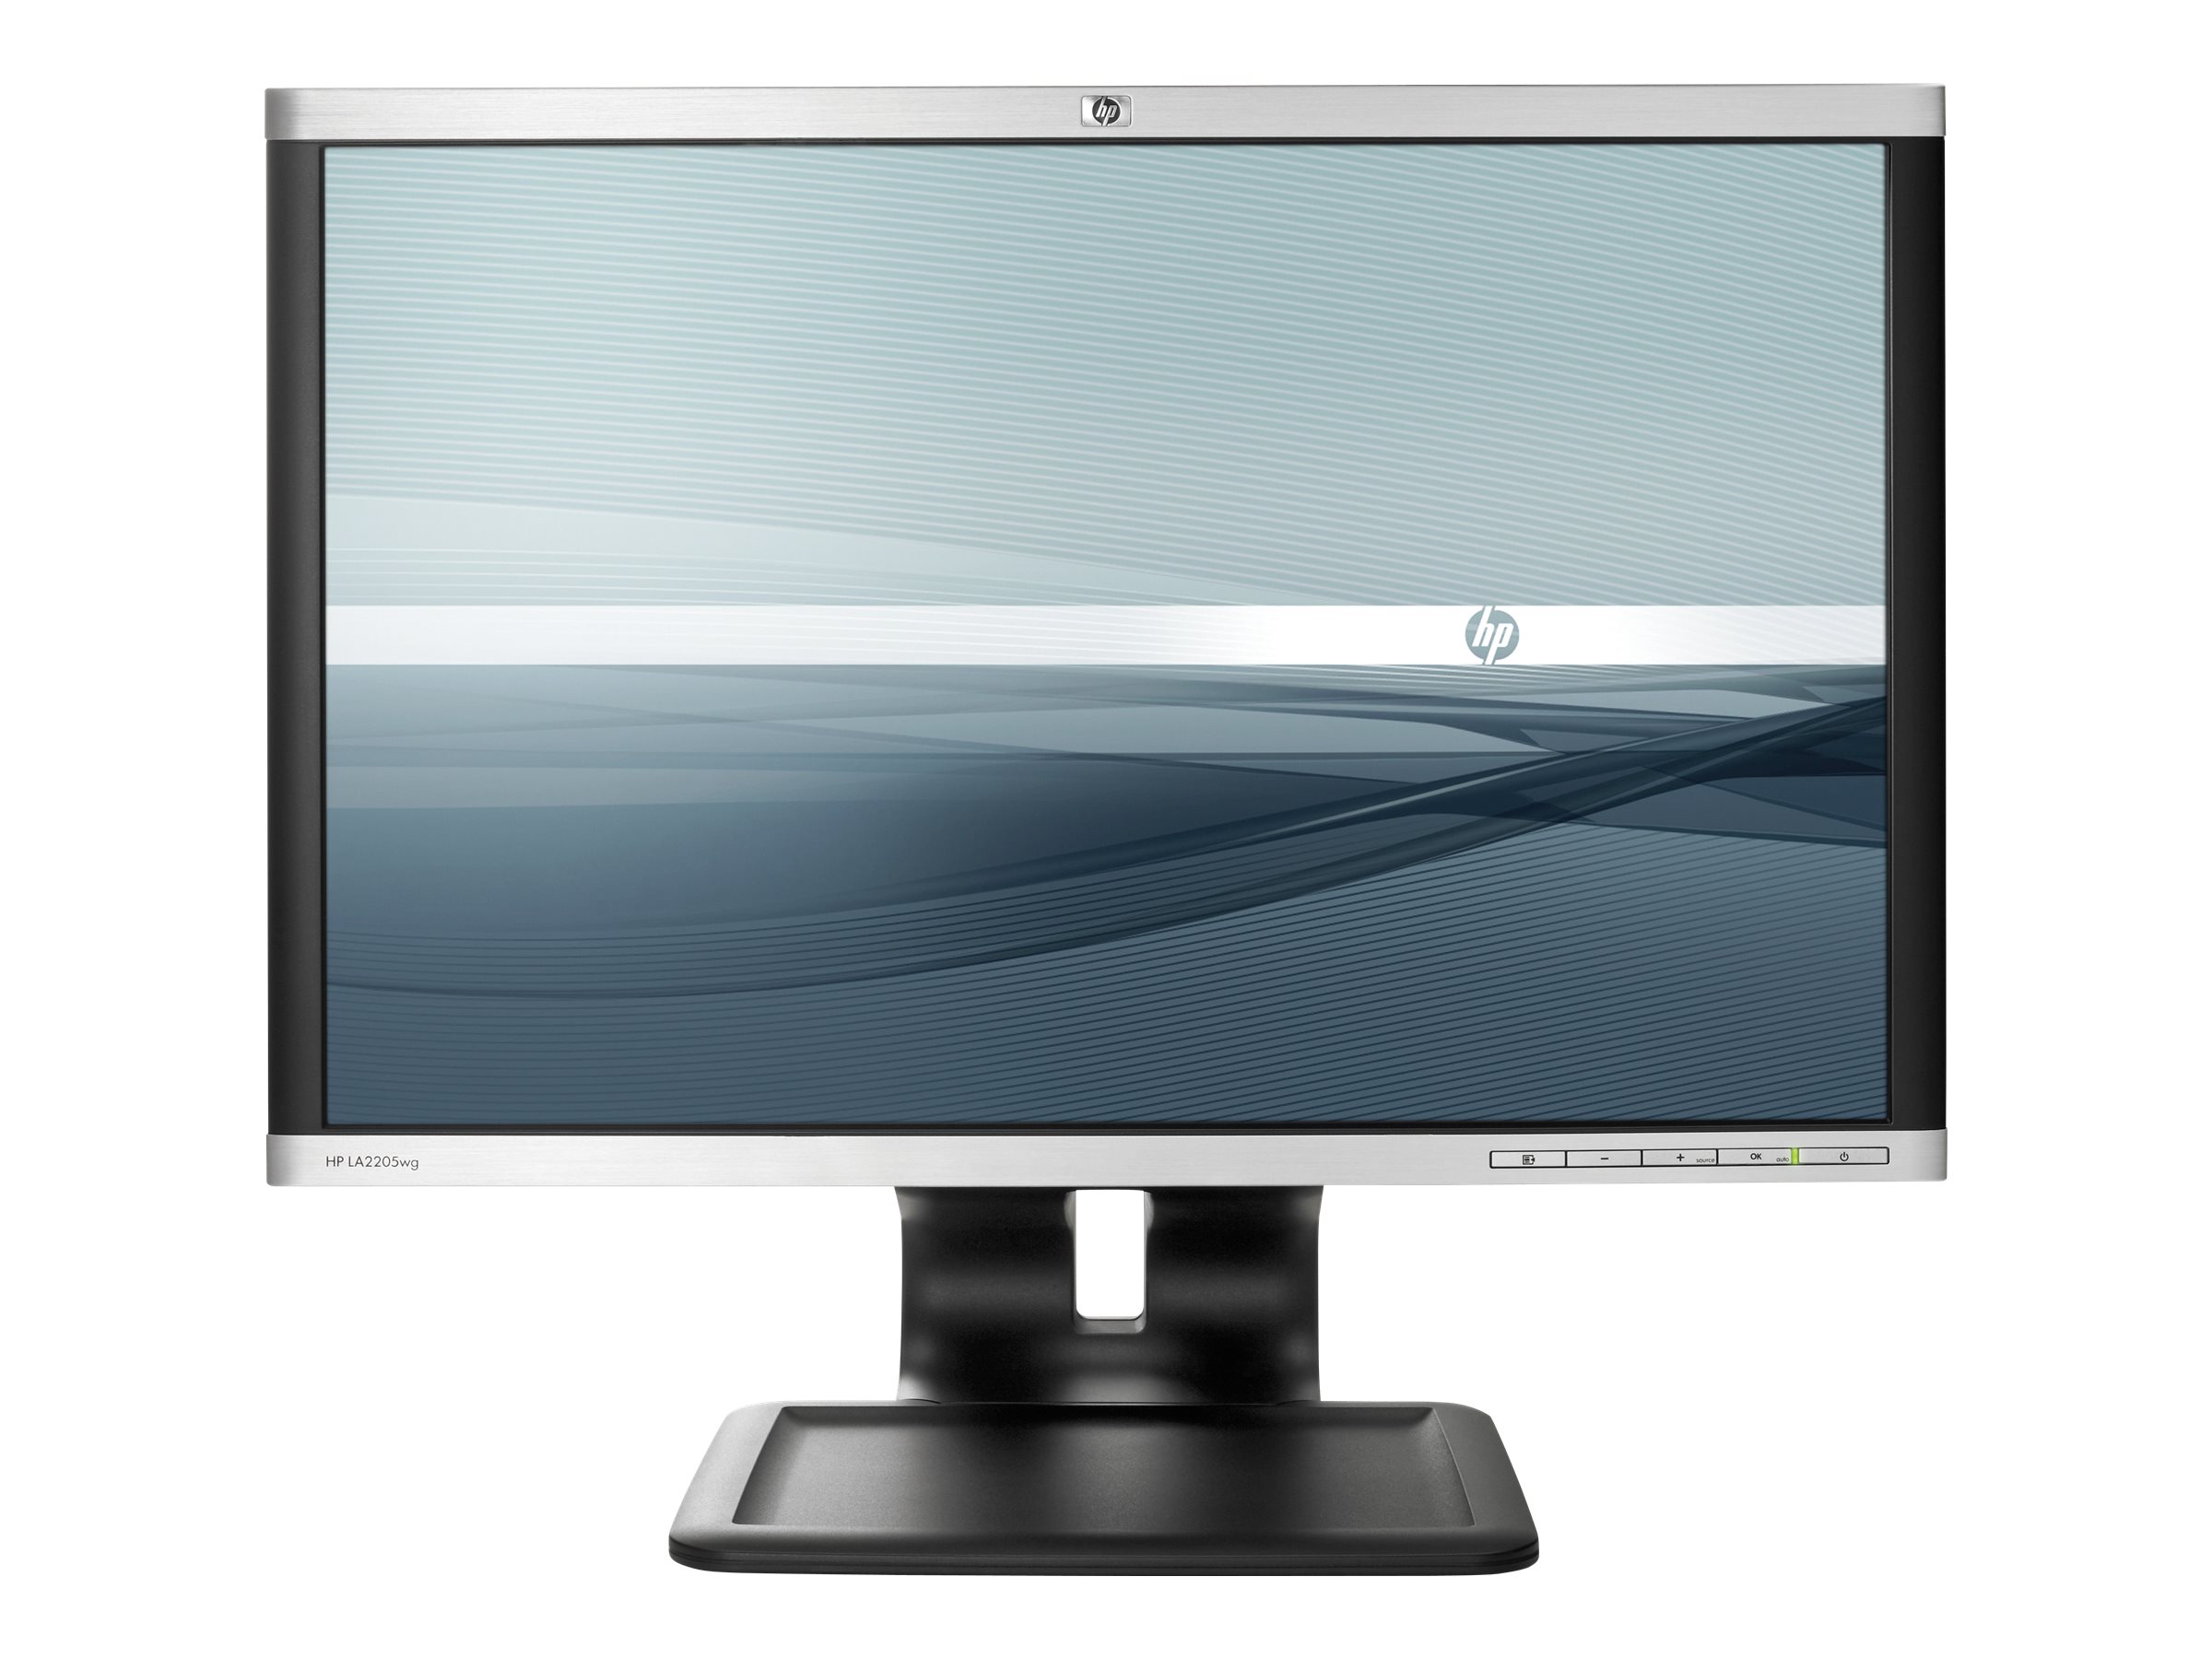 HP Compaq LA2205wg Monitor